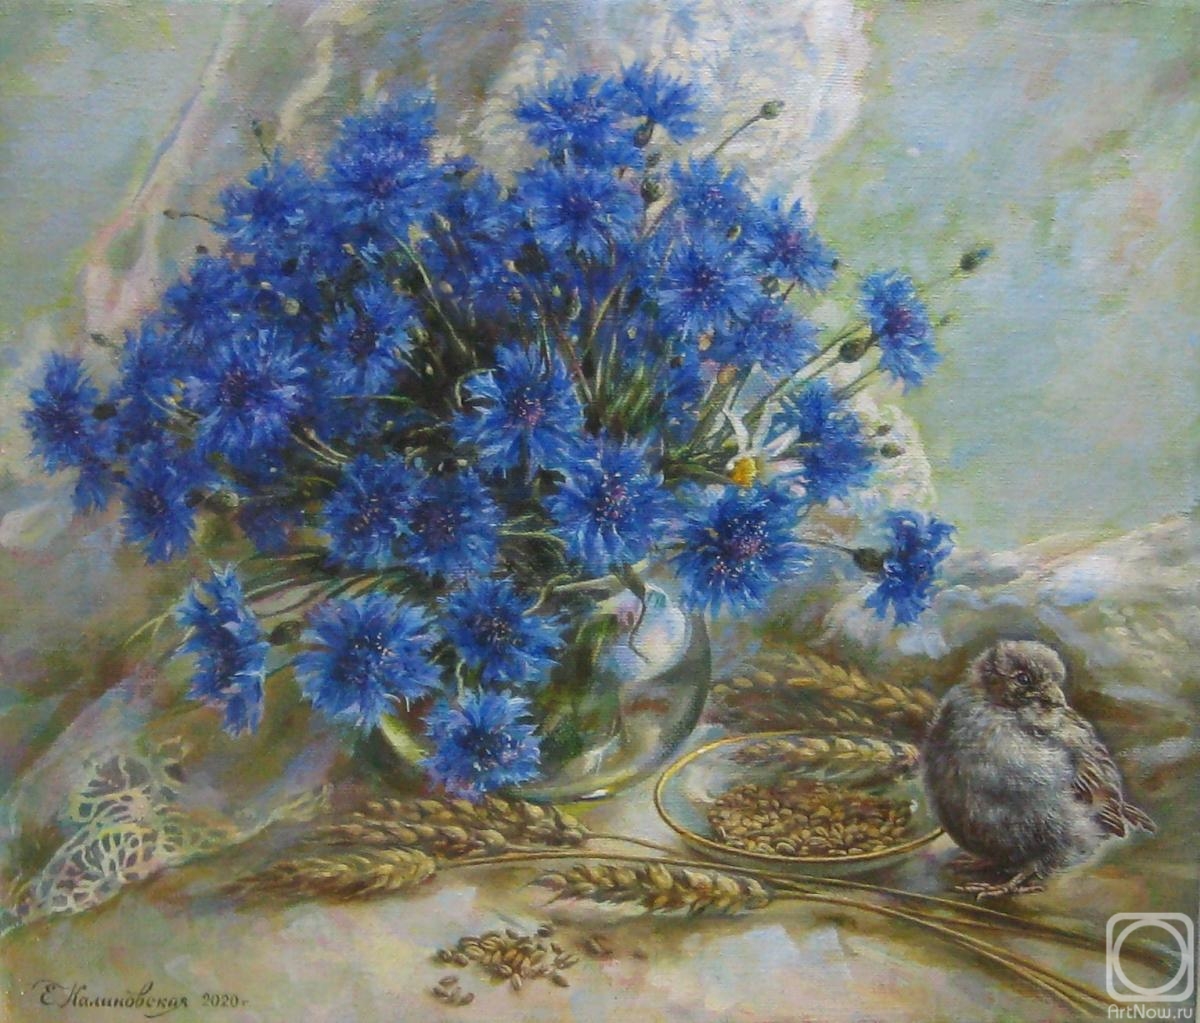 Kalinovskaya Ekaterina. Untitled